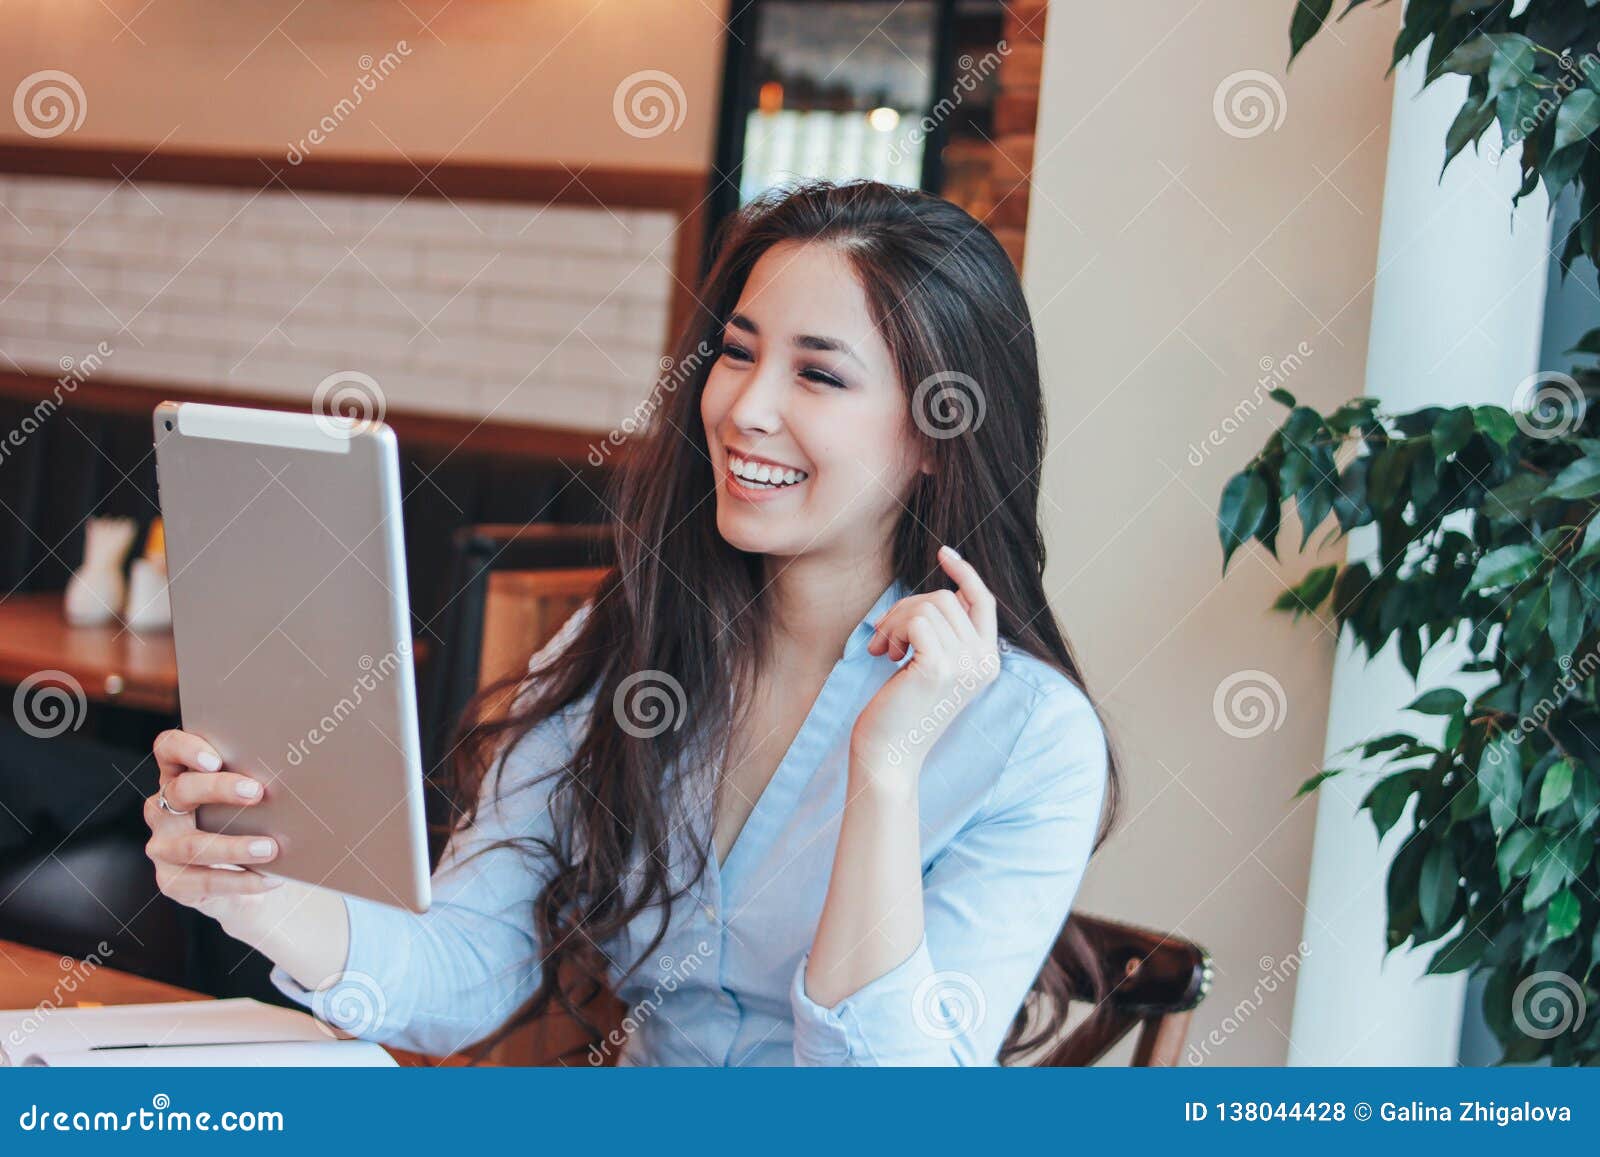 https://thumbs.dreamstime.com/z/beautiful-charming-brunette-smiling-asian-girl-speaking-studying-something-tablet-cafe-138044428.jpg